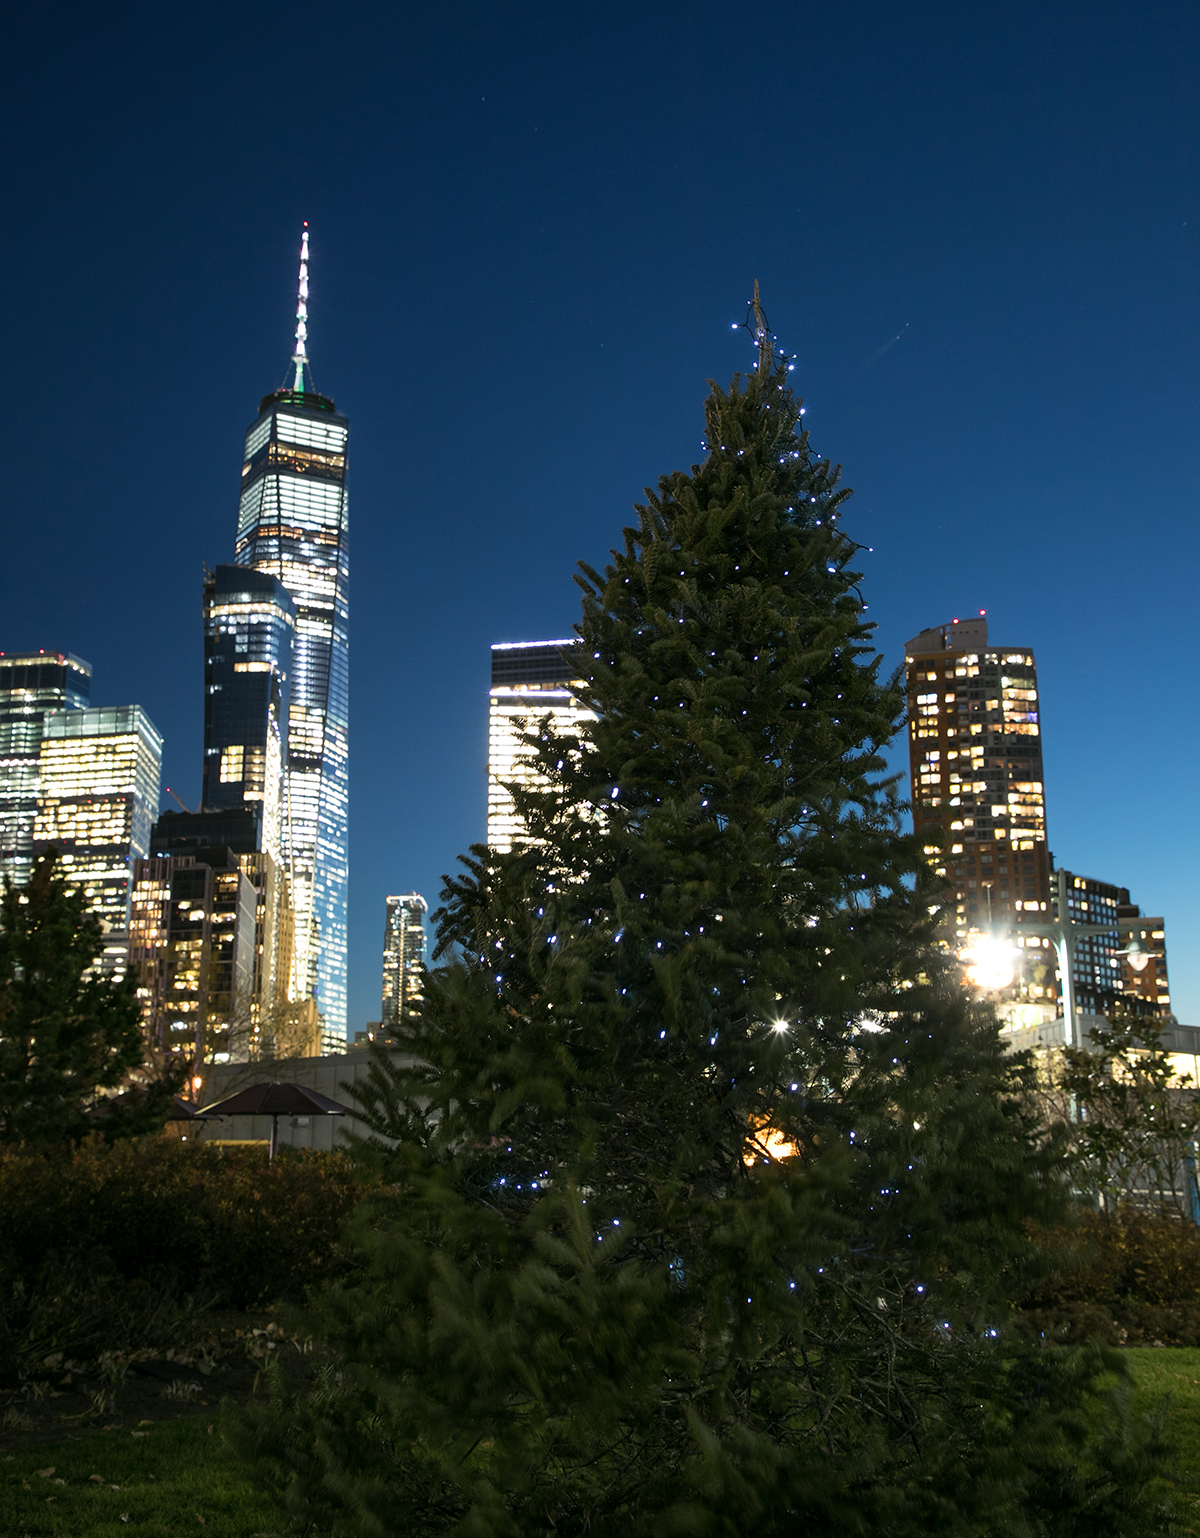 Pine trees lit up around the Hudson River Park